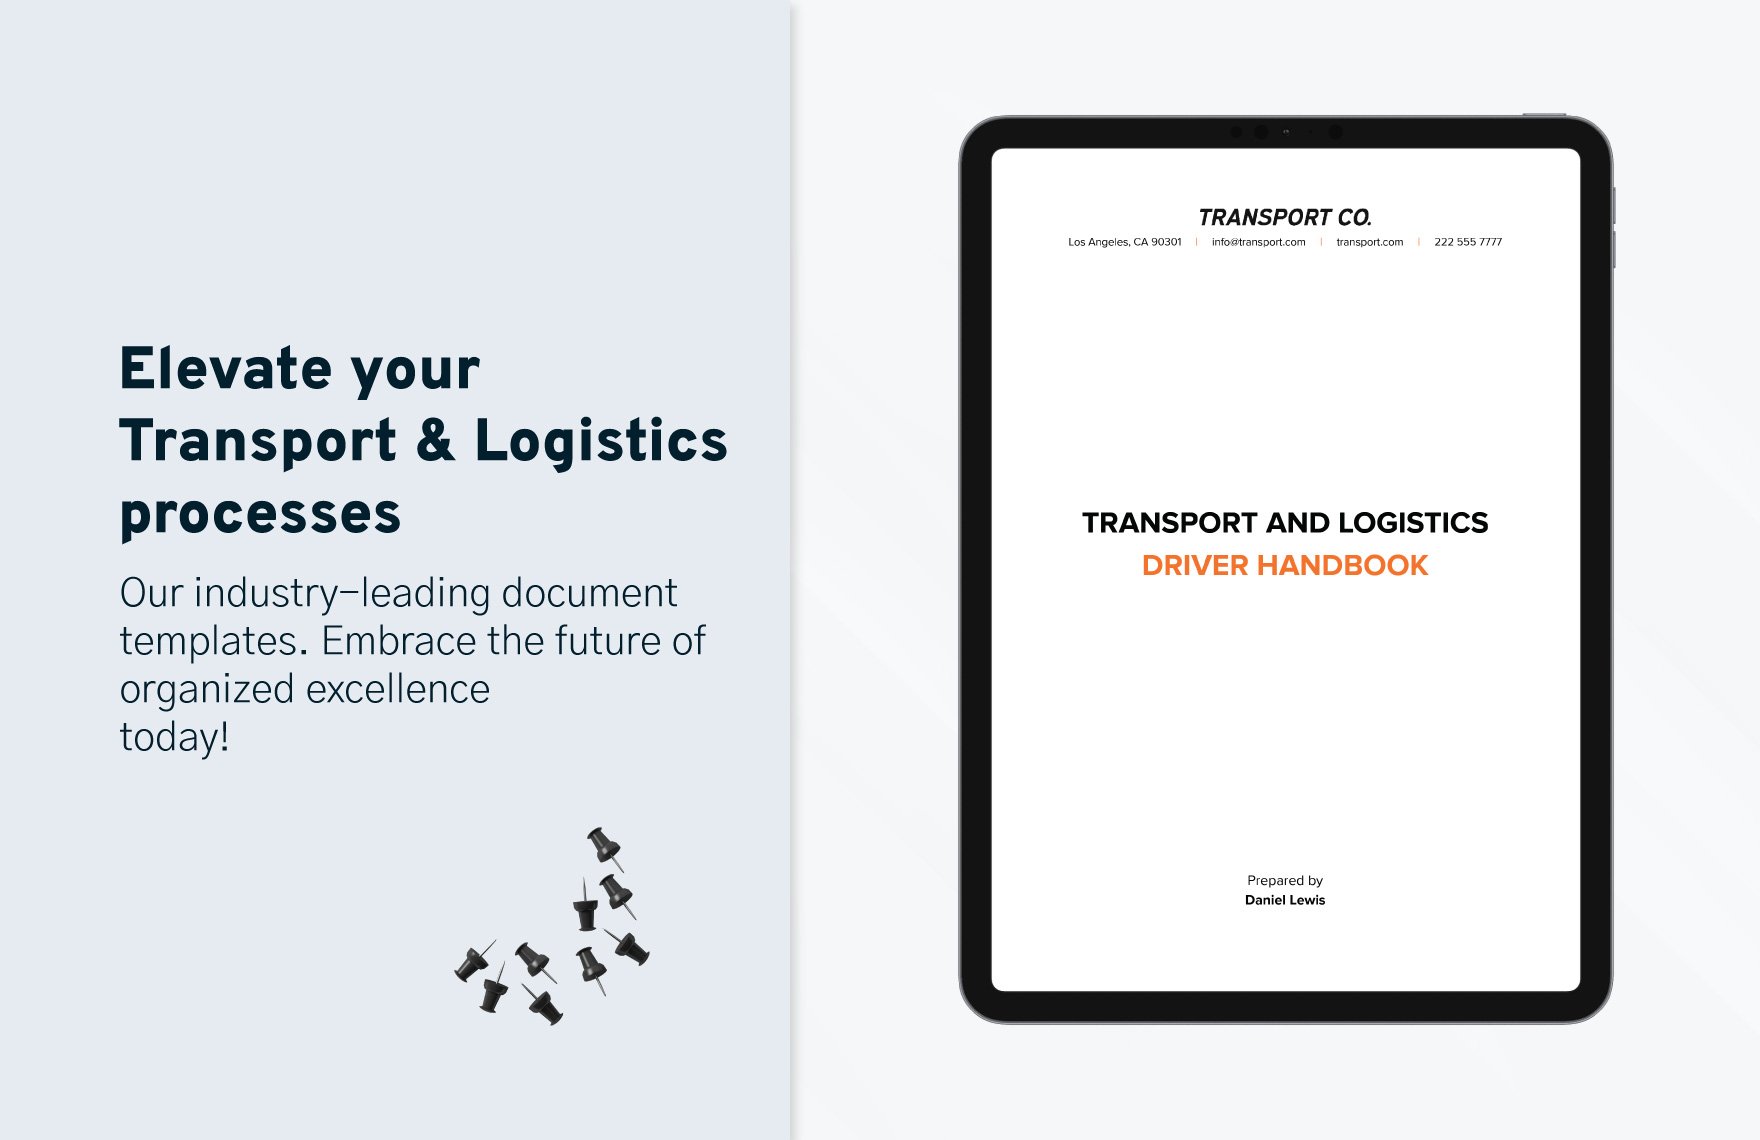 Transport and Logistics Driver Handbook Template